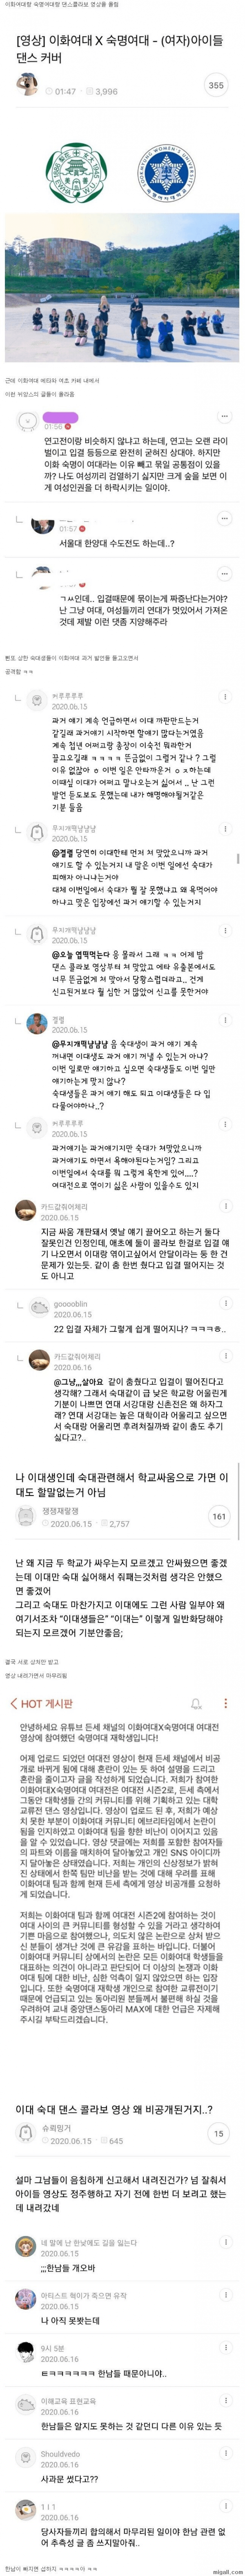 image (3).png 이화여대 x 숙명여대 댄스 콜라보 결과...jpg